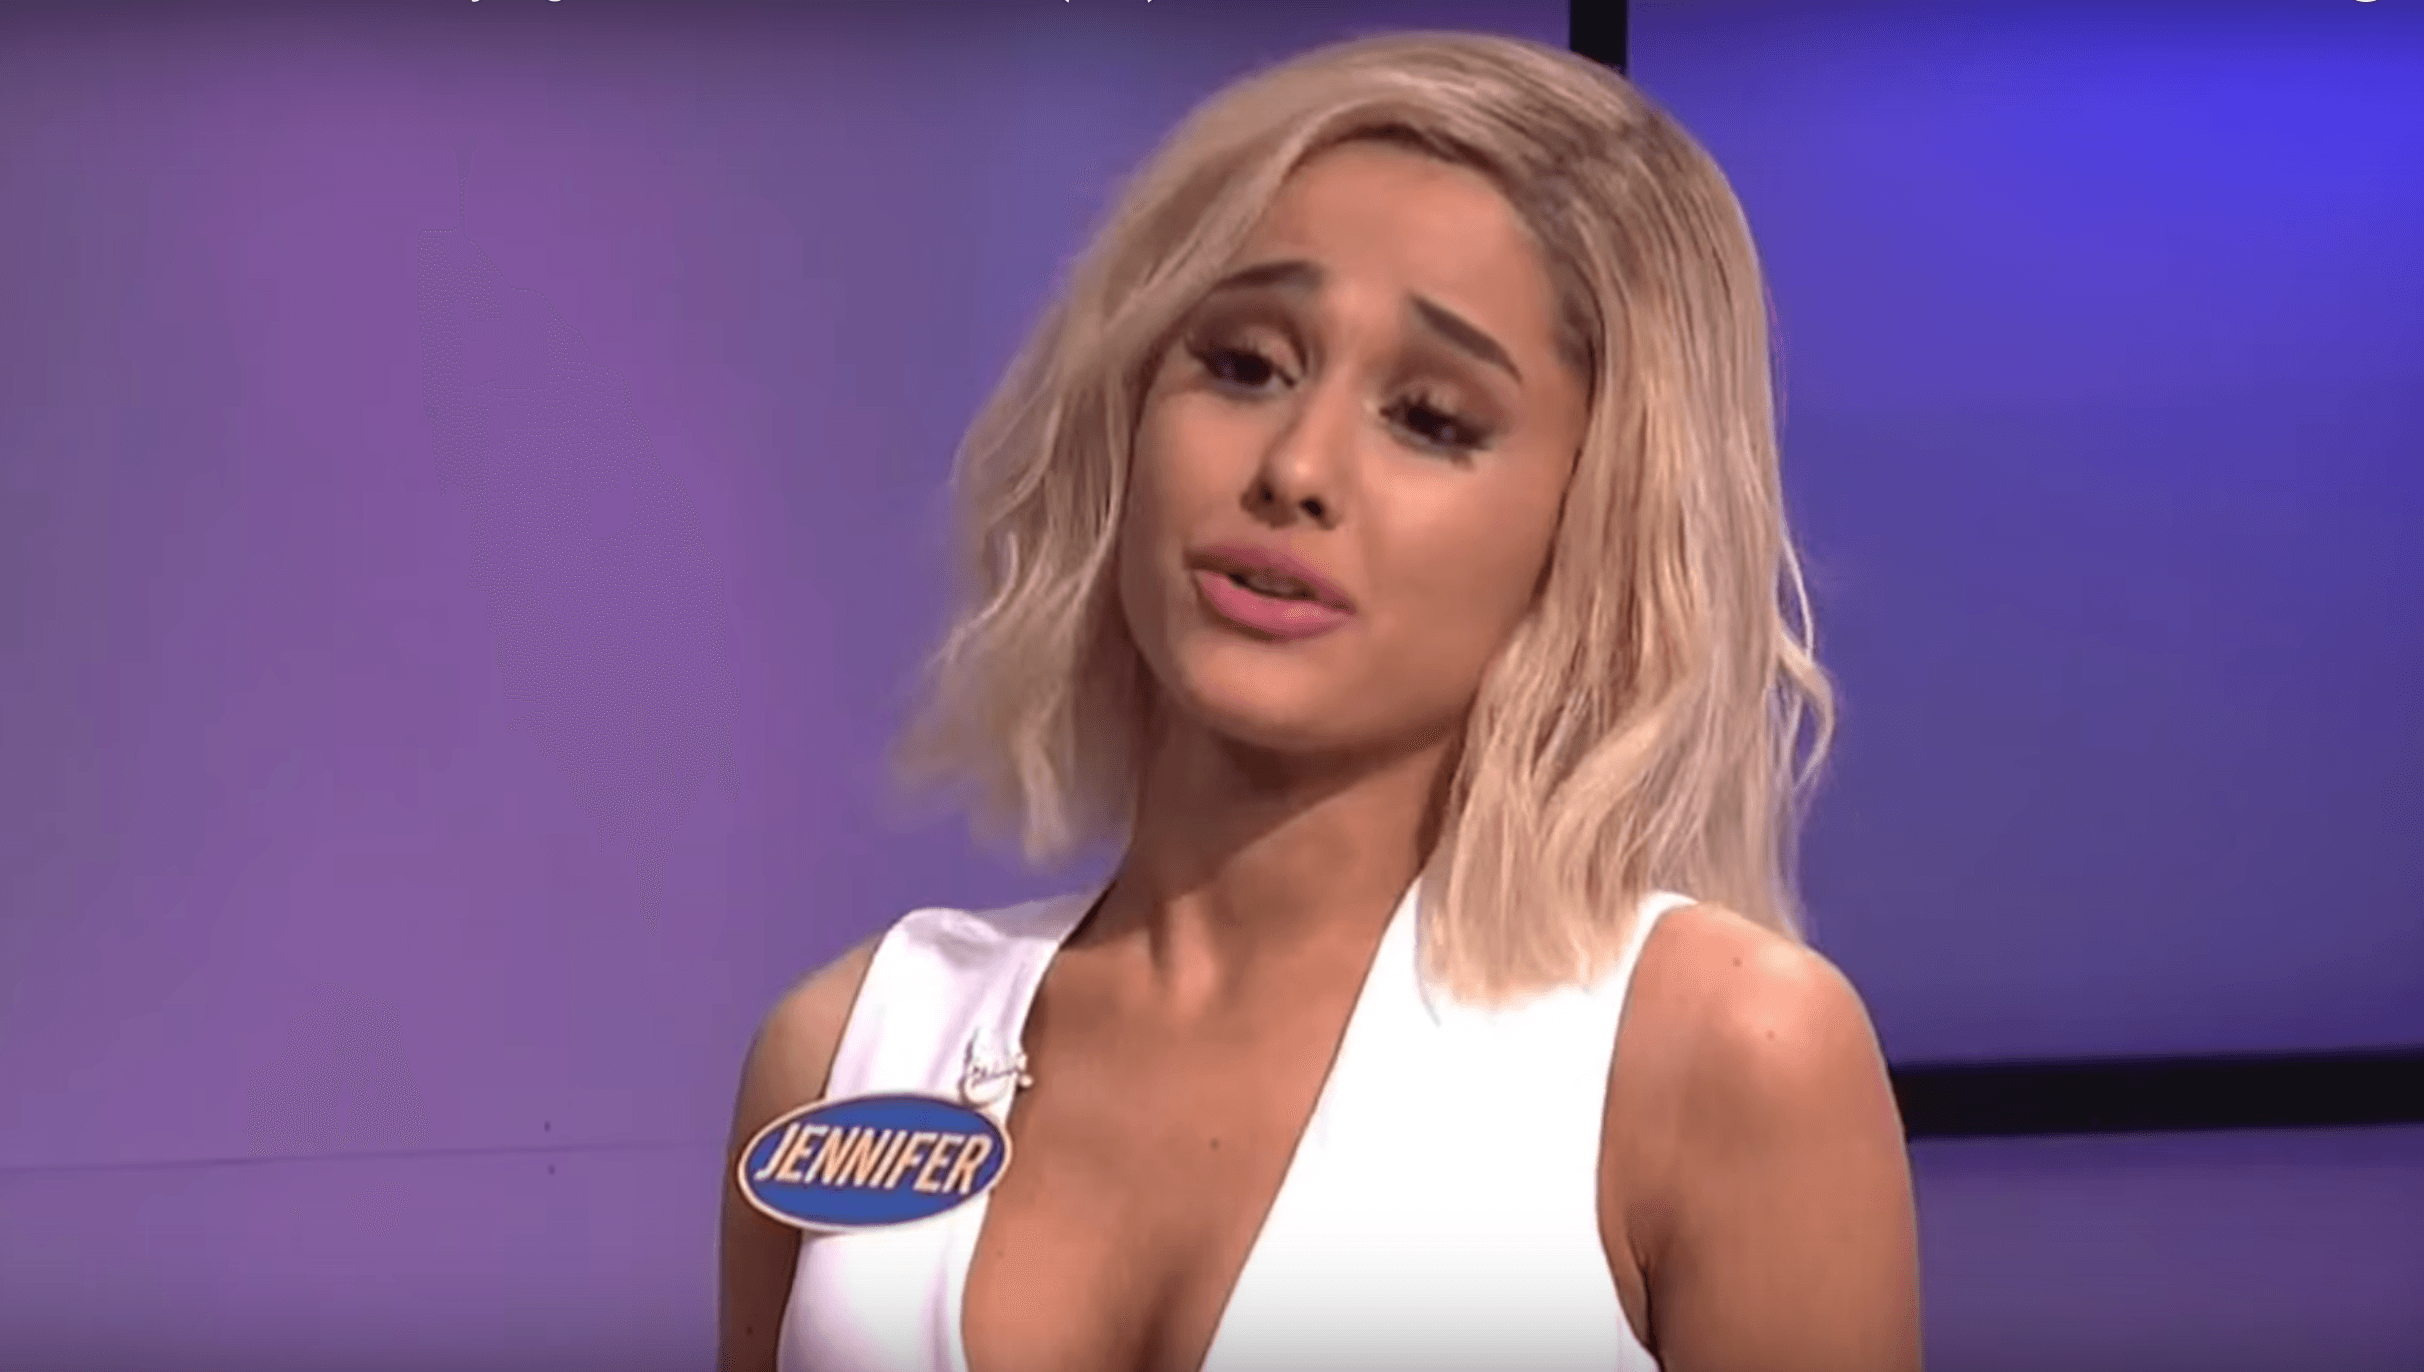 Ariana Grande pulls off Jennifer Lawrence impression in ‘SNL’ skit